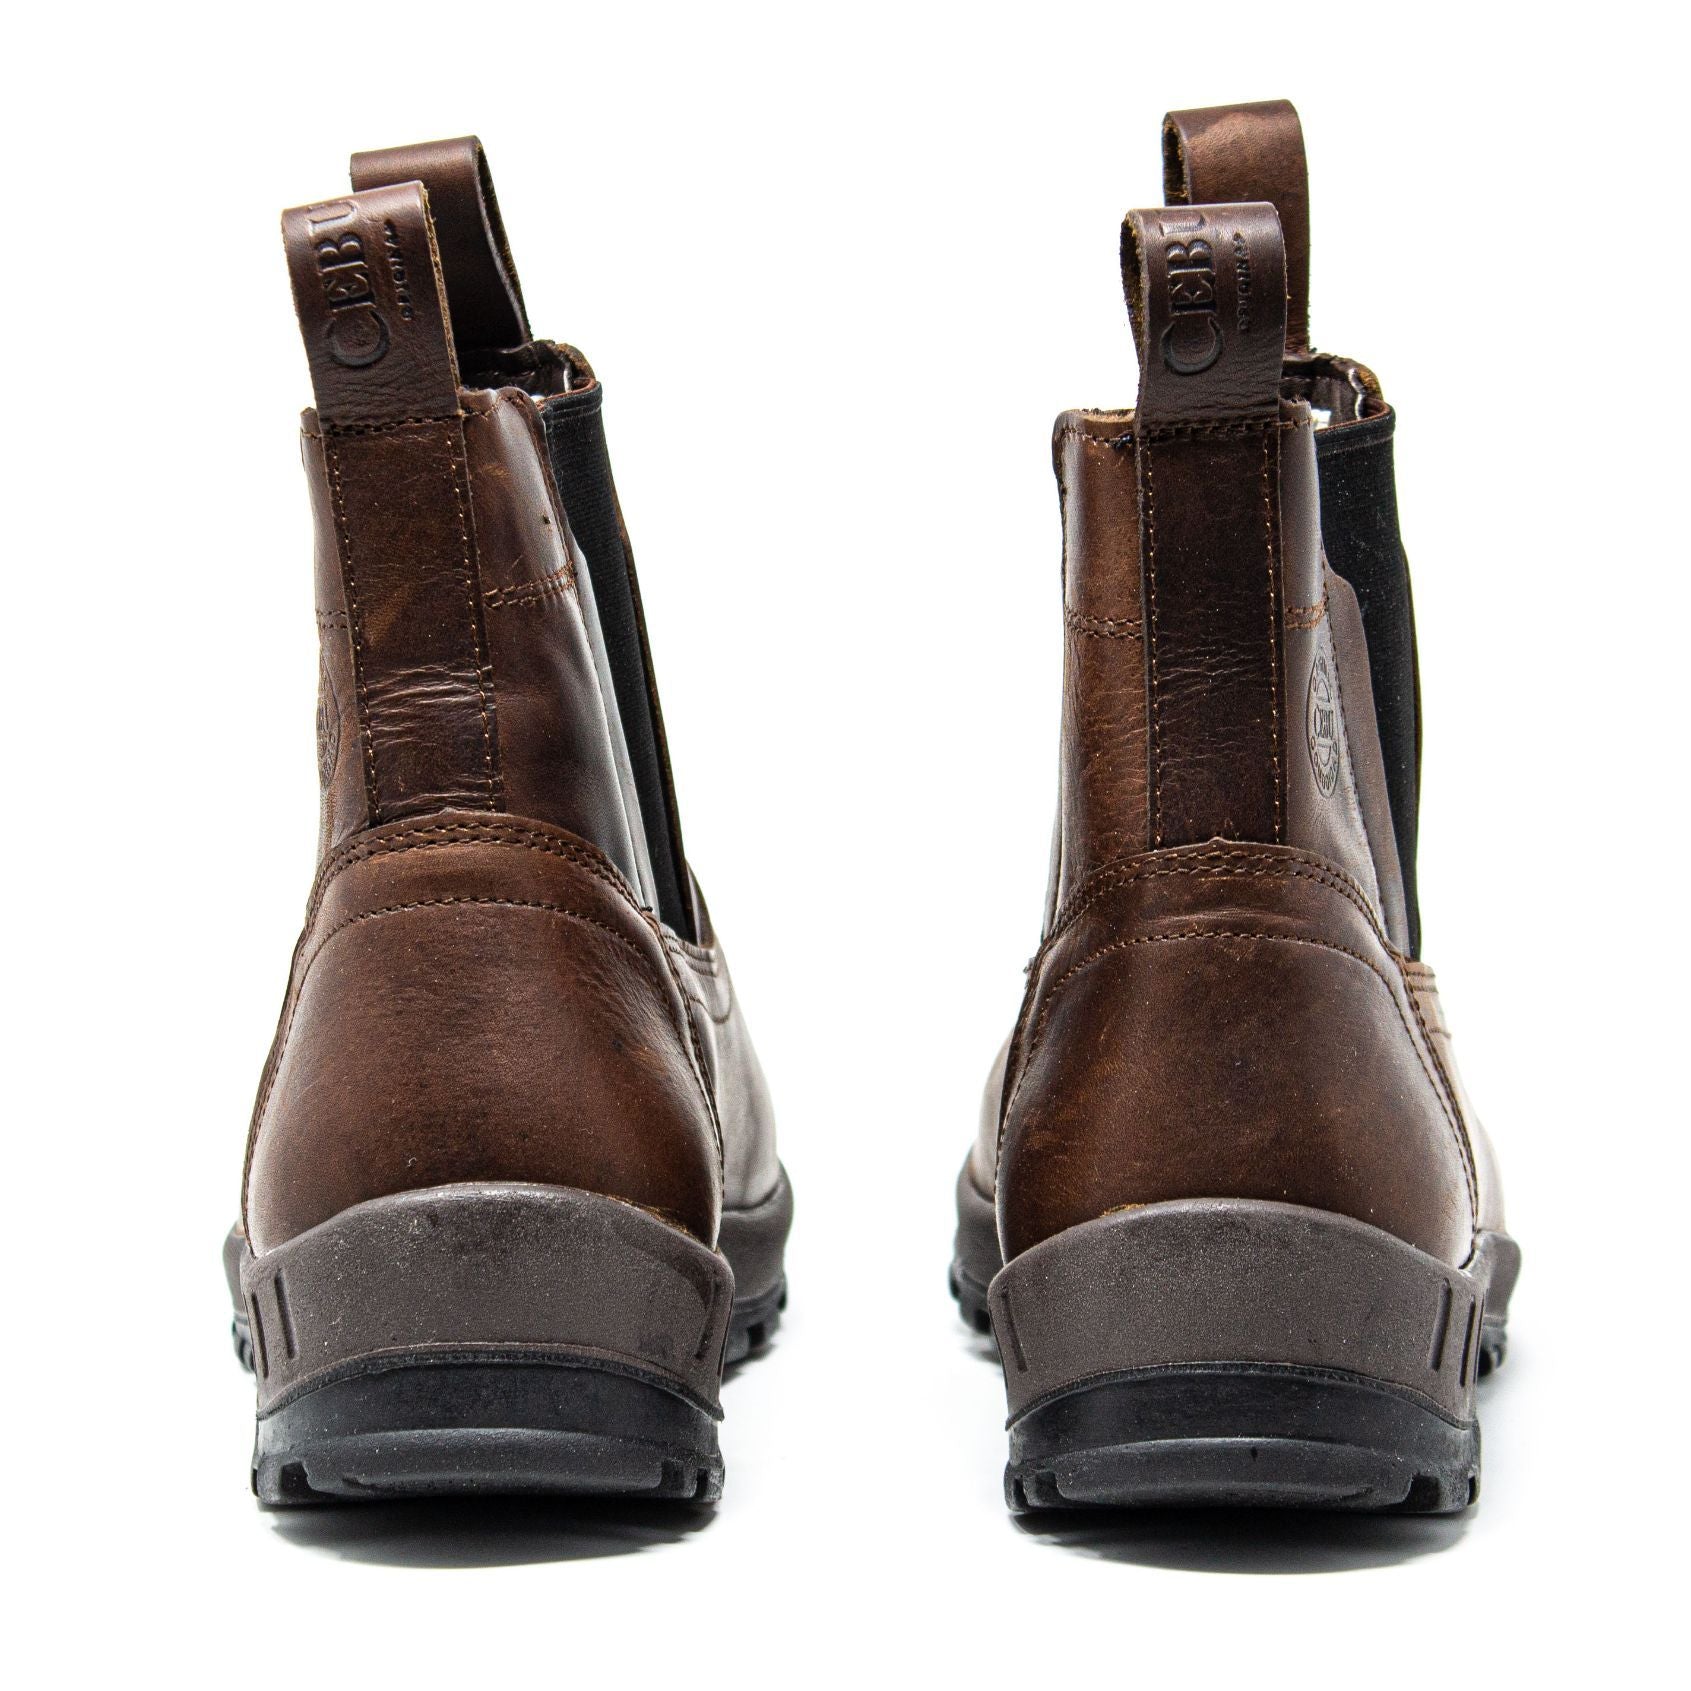 Men's Work Boots - Steel Toe & Lightweight - Brown Work Boots - Cebu - Slip On Work Boots - Brown Ankle Work Boots